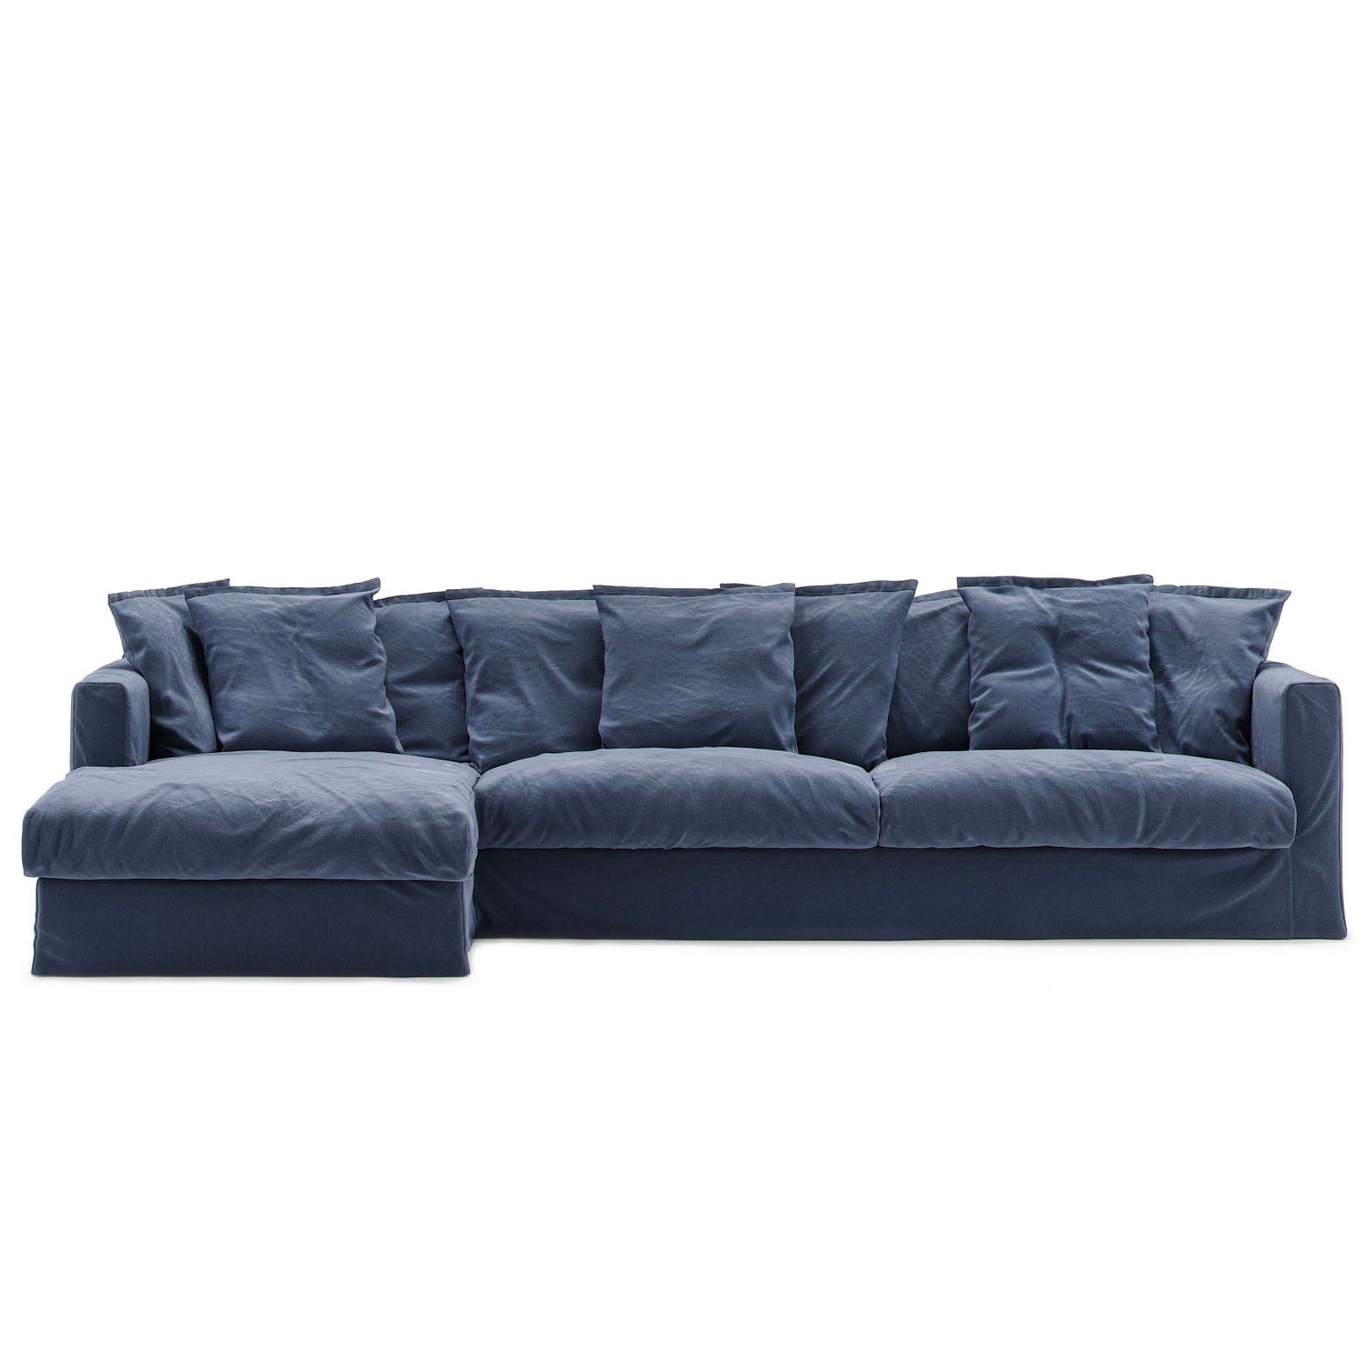 Le Grand Air Upholstery 3-Seater Divan Left, Blue